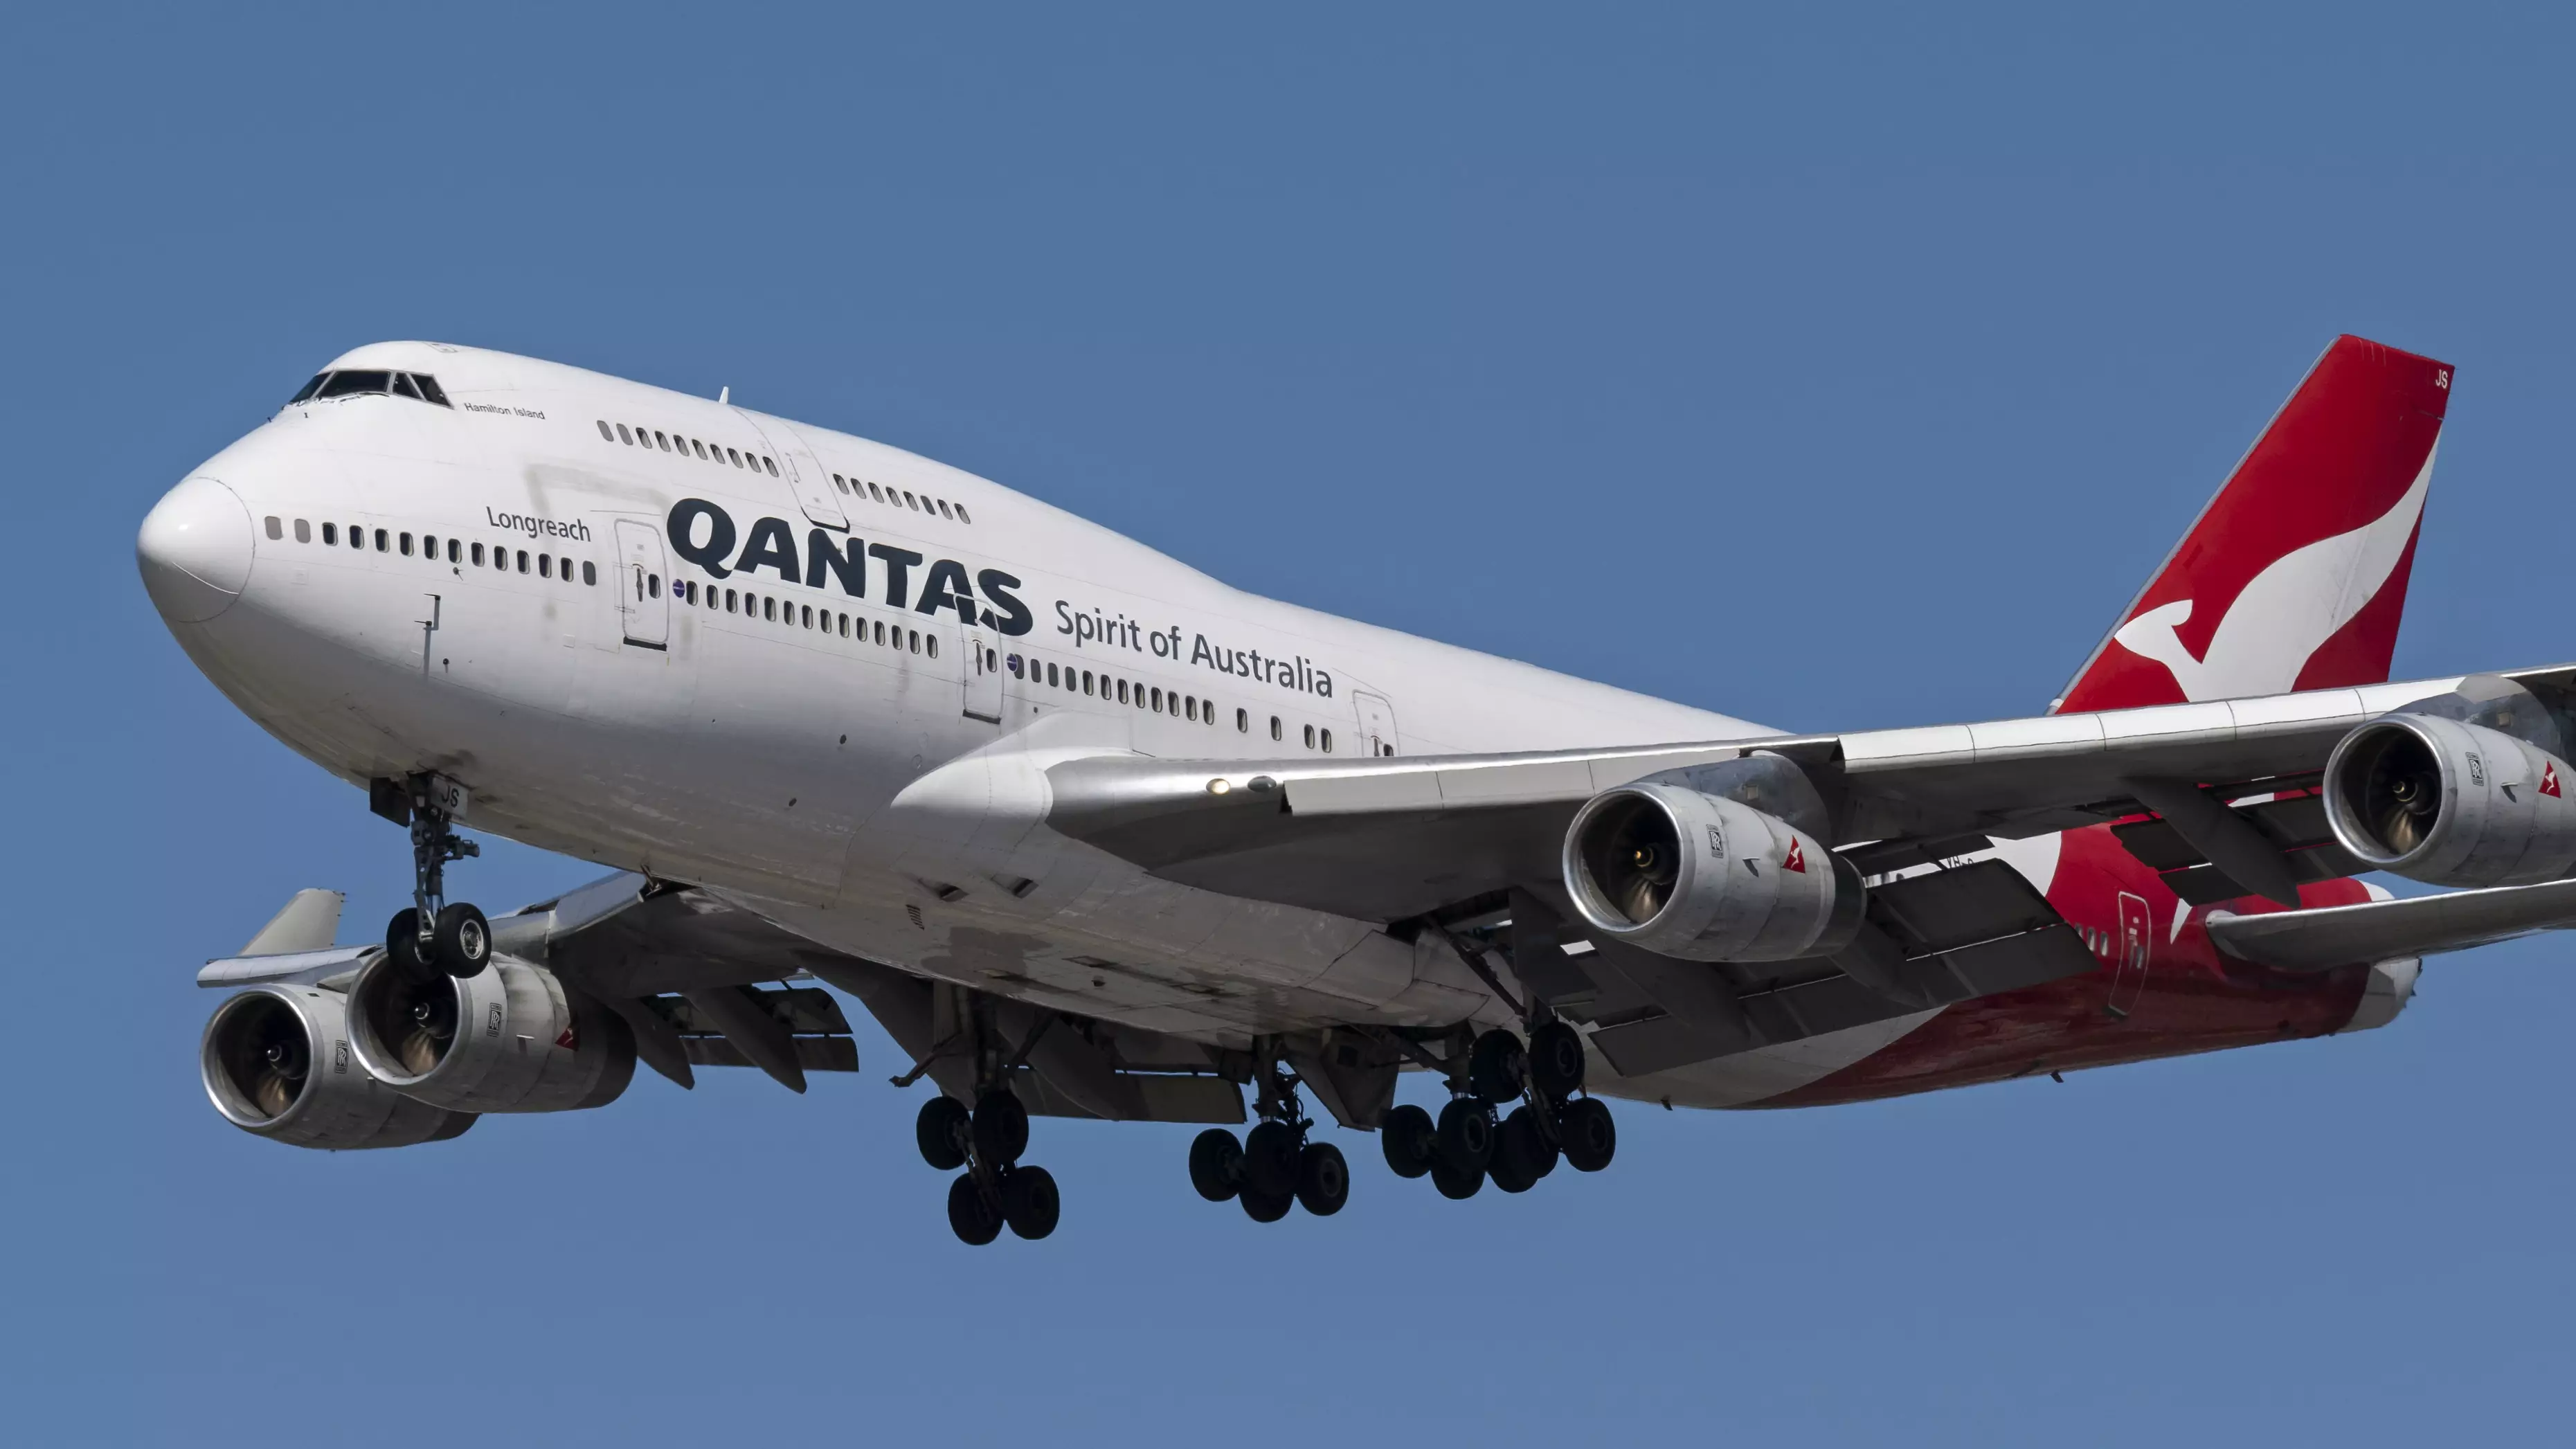 International Travel Unlikely For Australians Until 2022